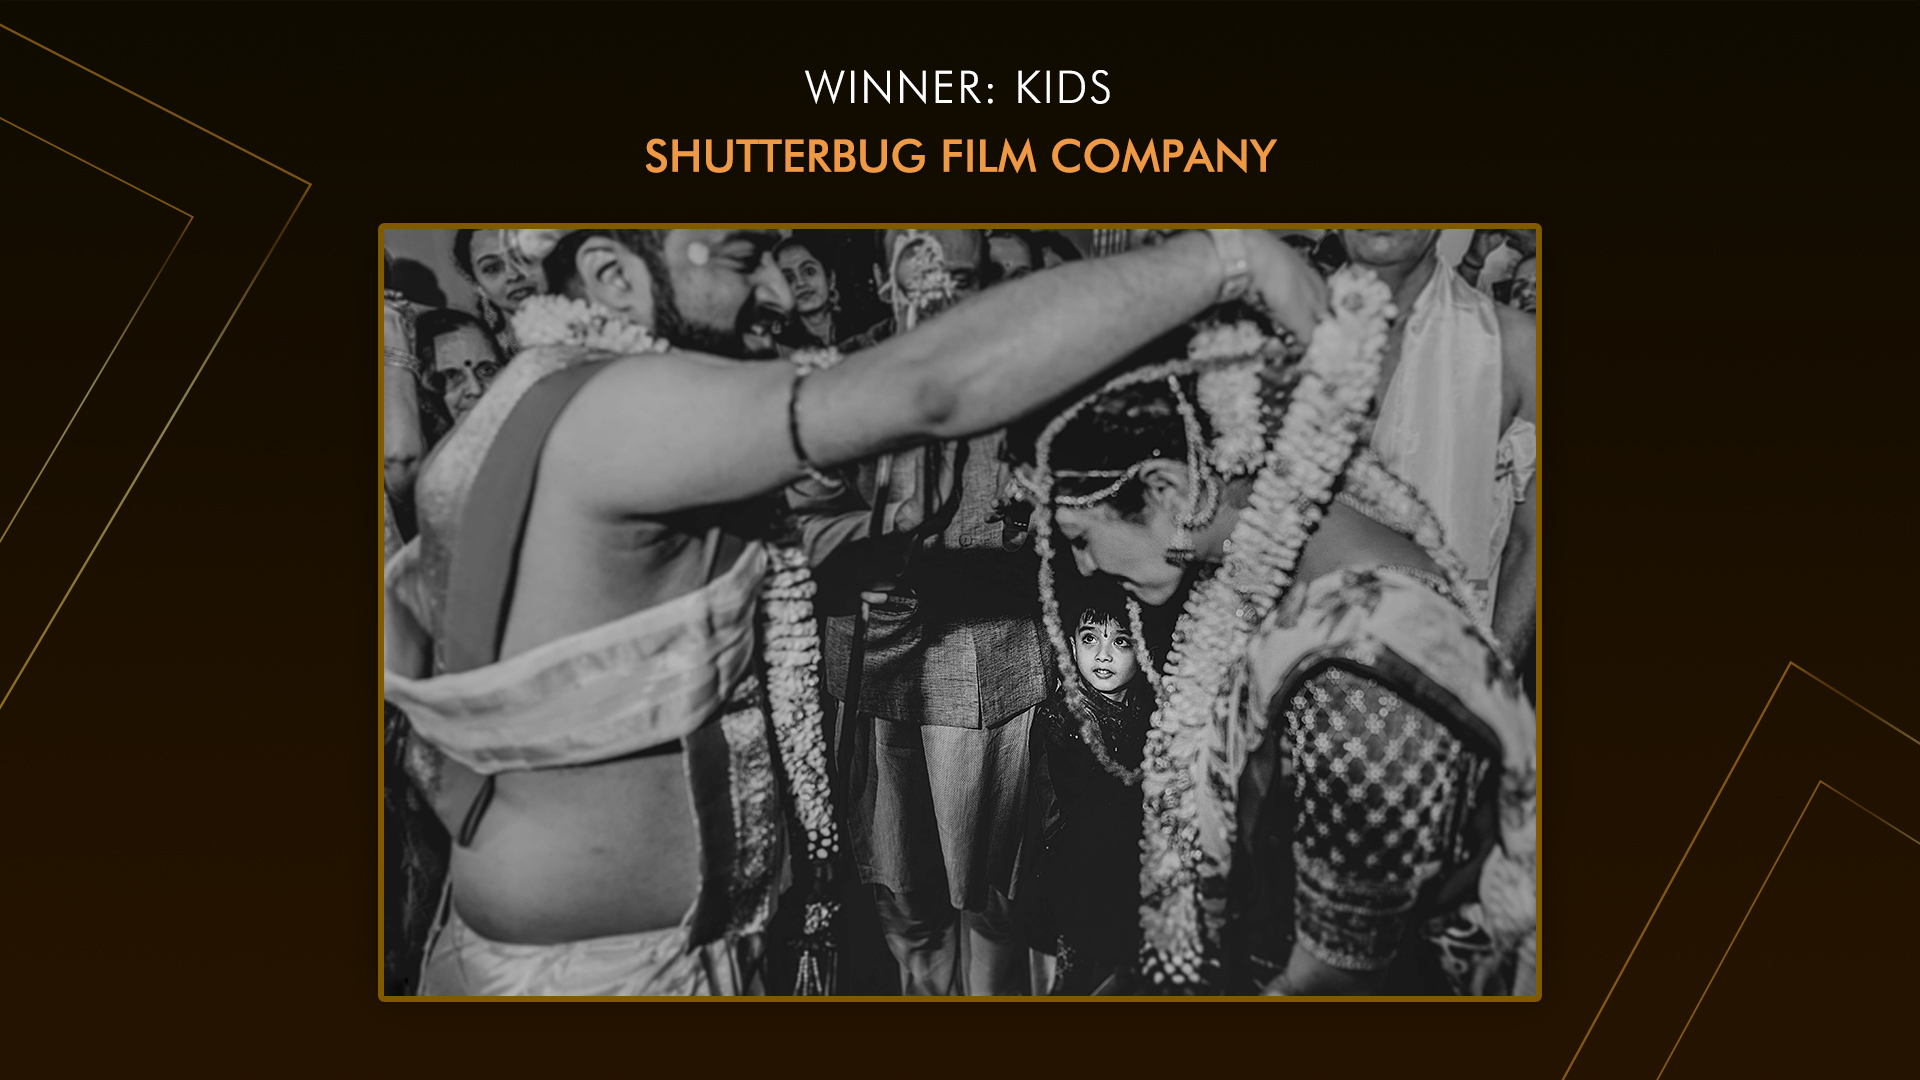 Shutterbug Film Company